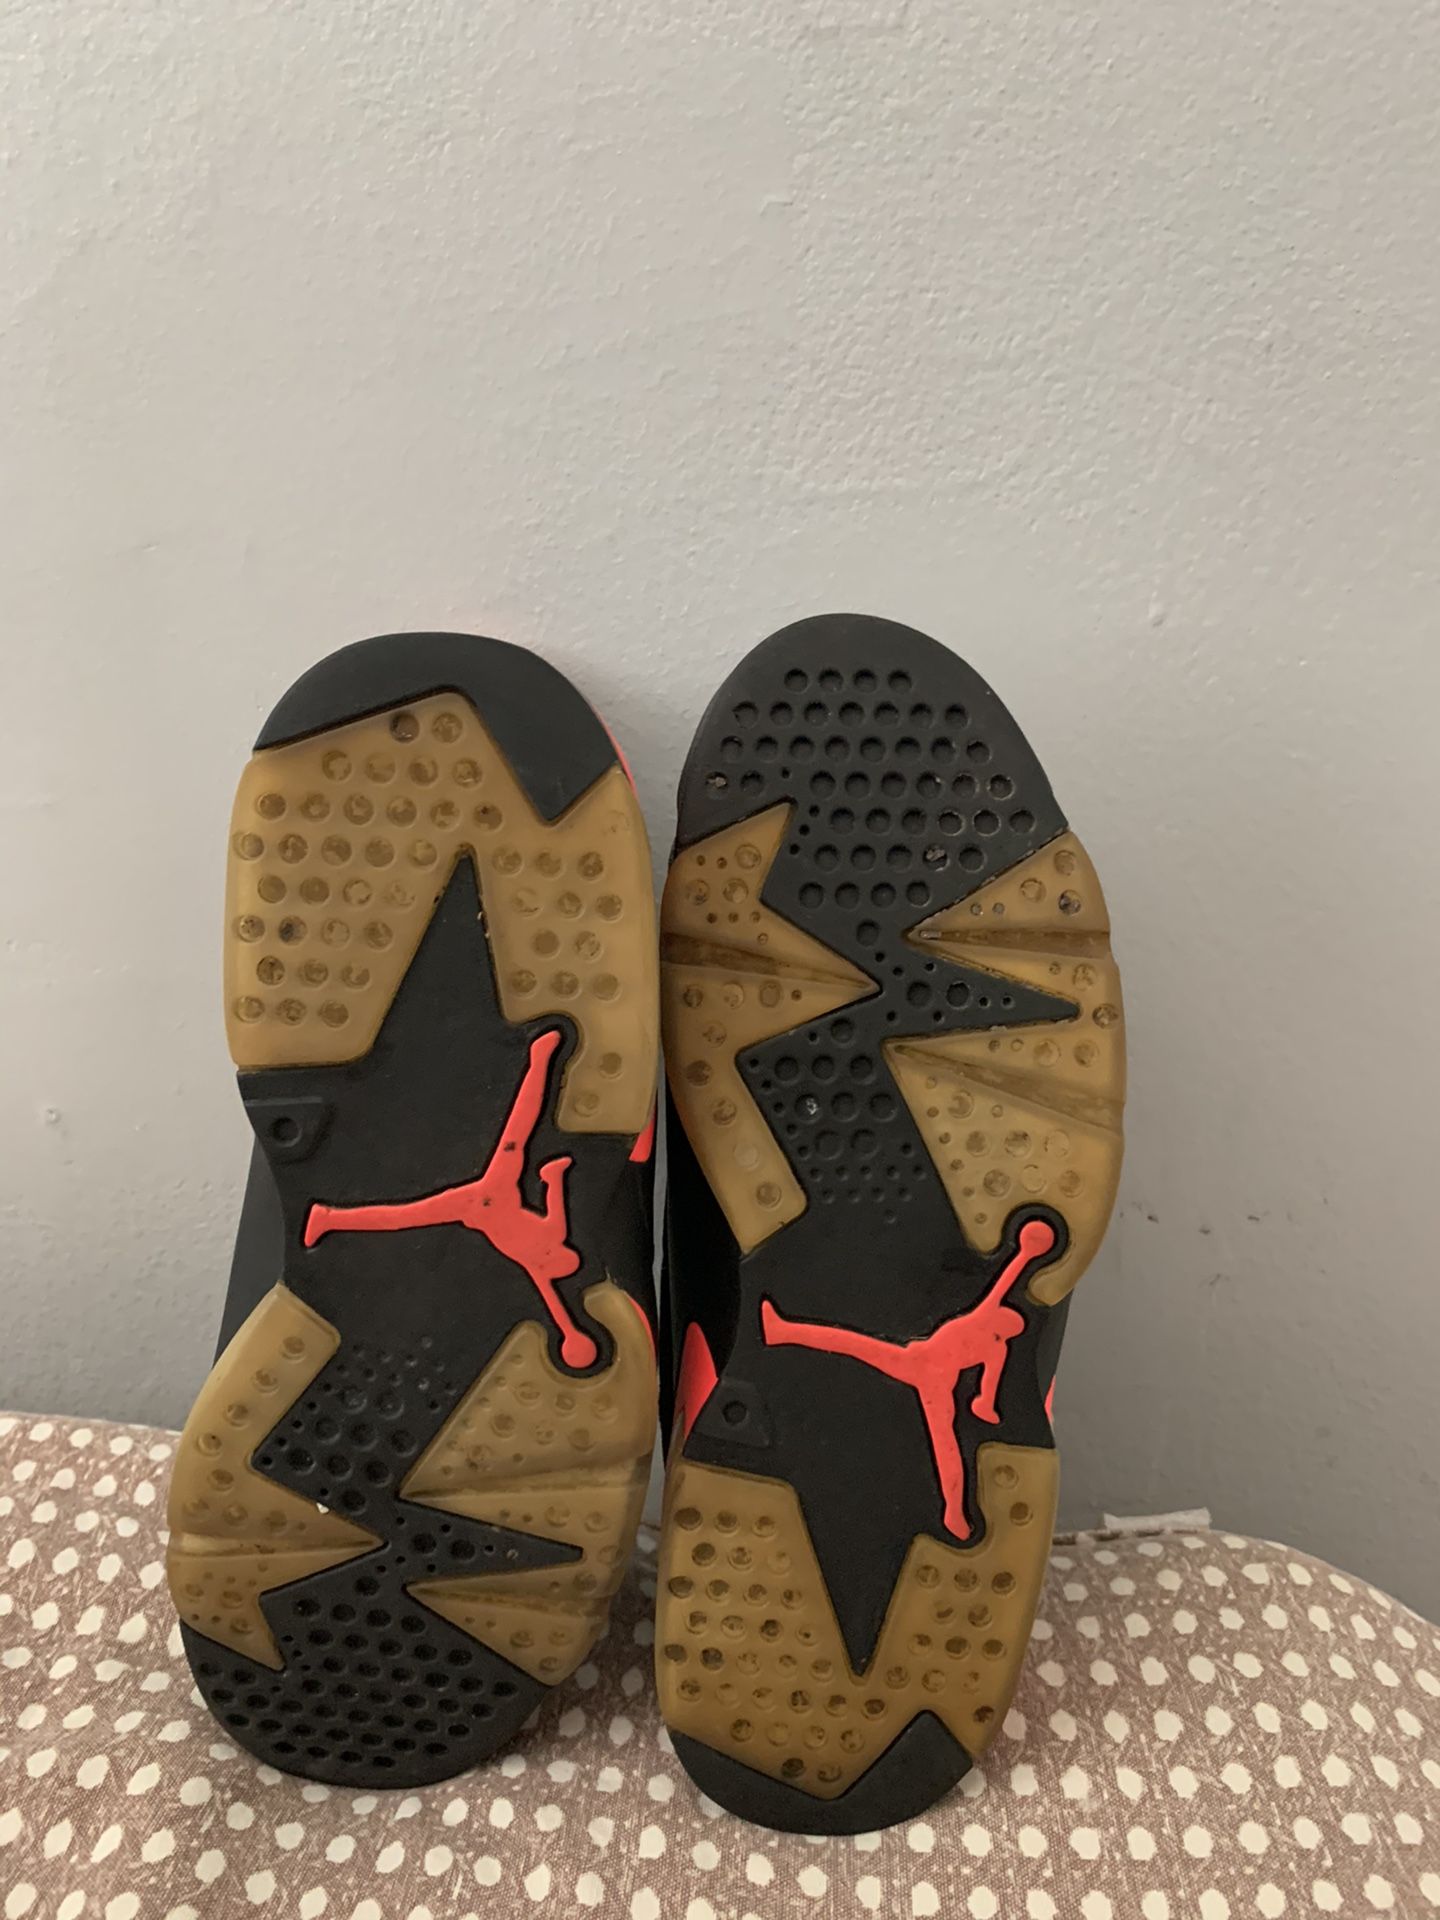 Jordan shoes / size 8